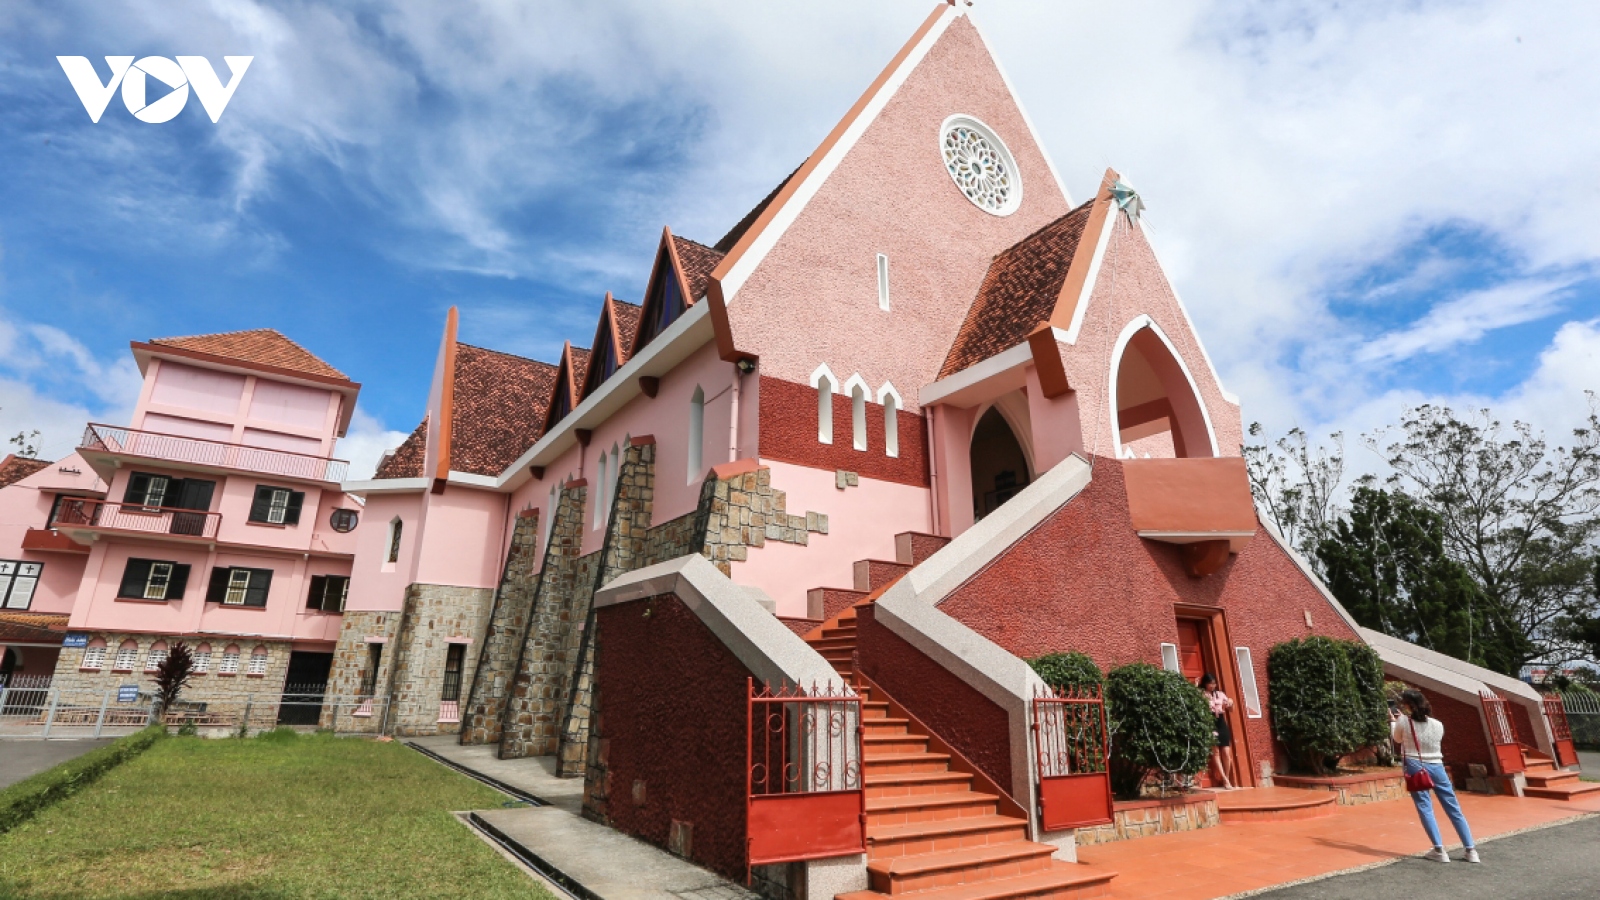 Visiting old pink Catholic church in Da Lat city